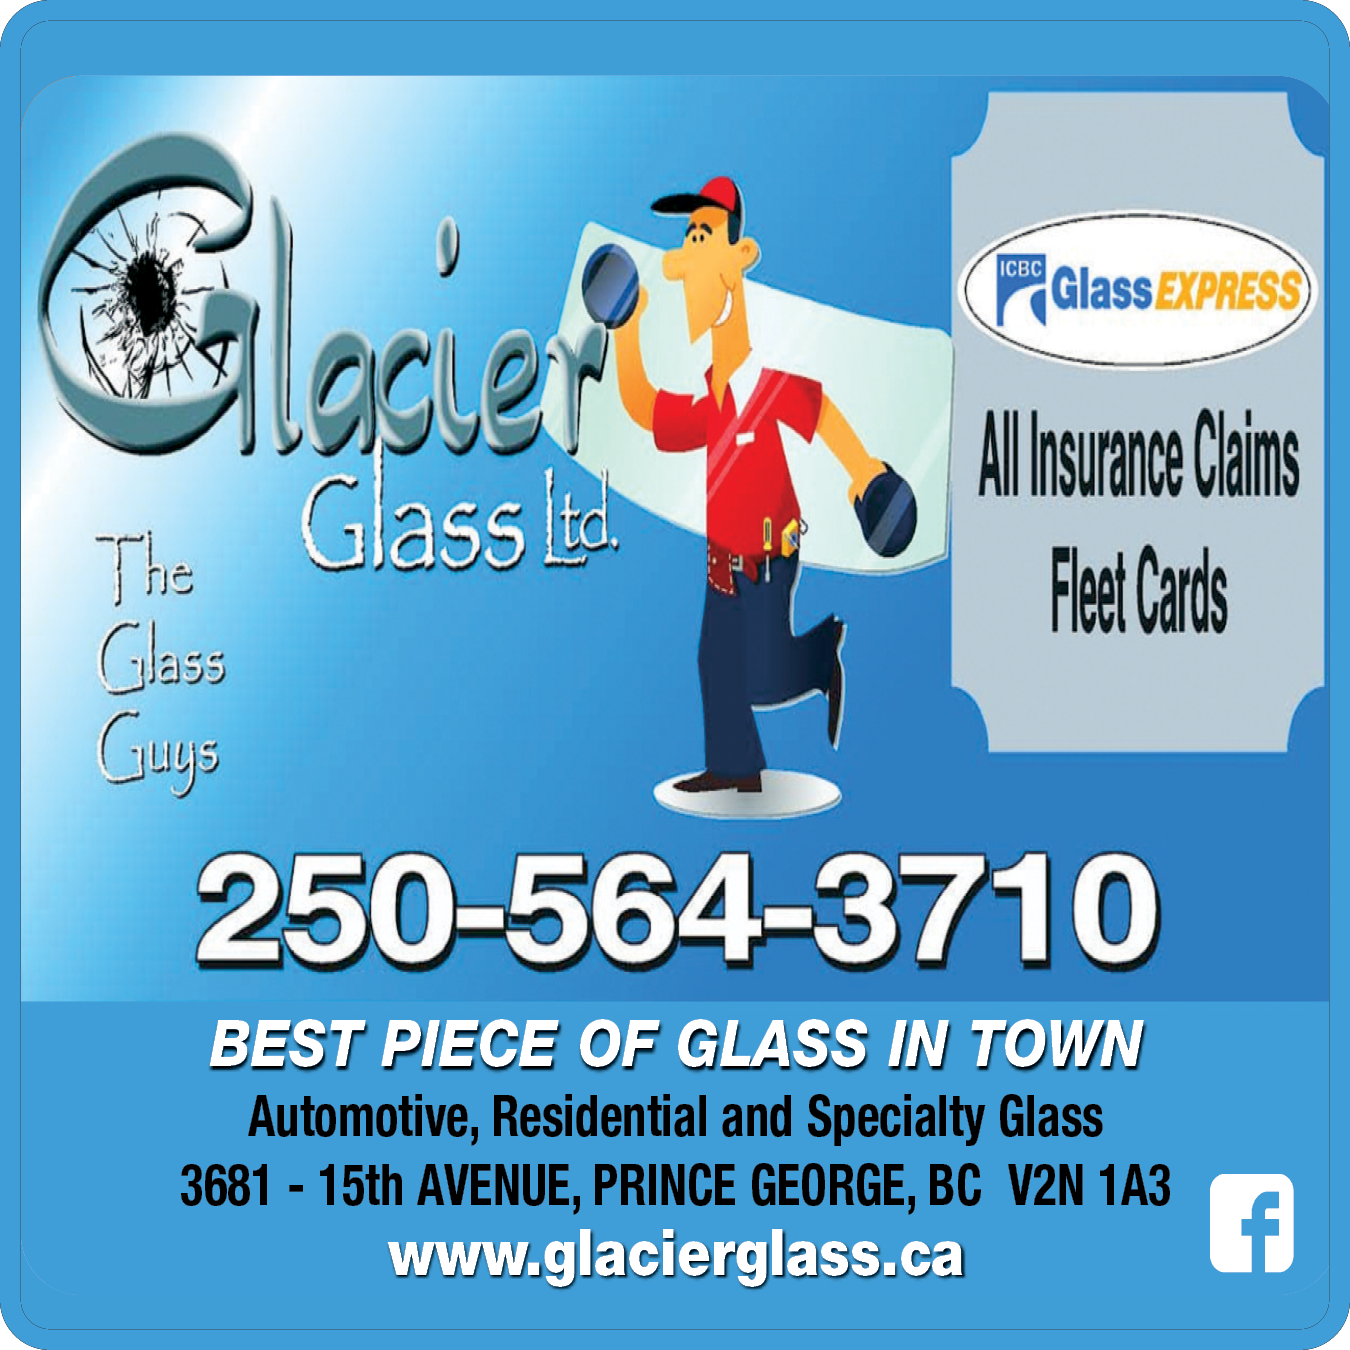 Glacier Glass Ltd